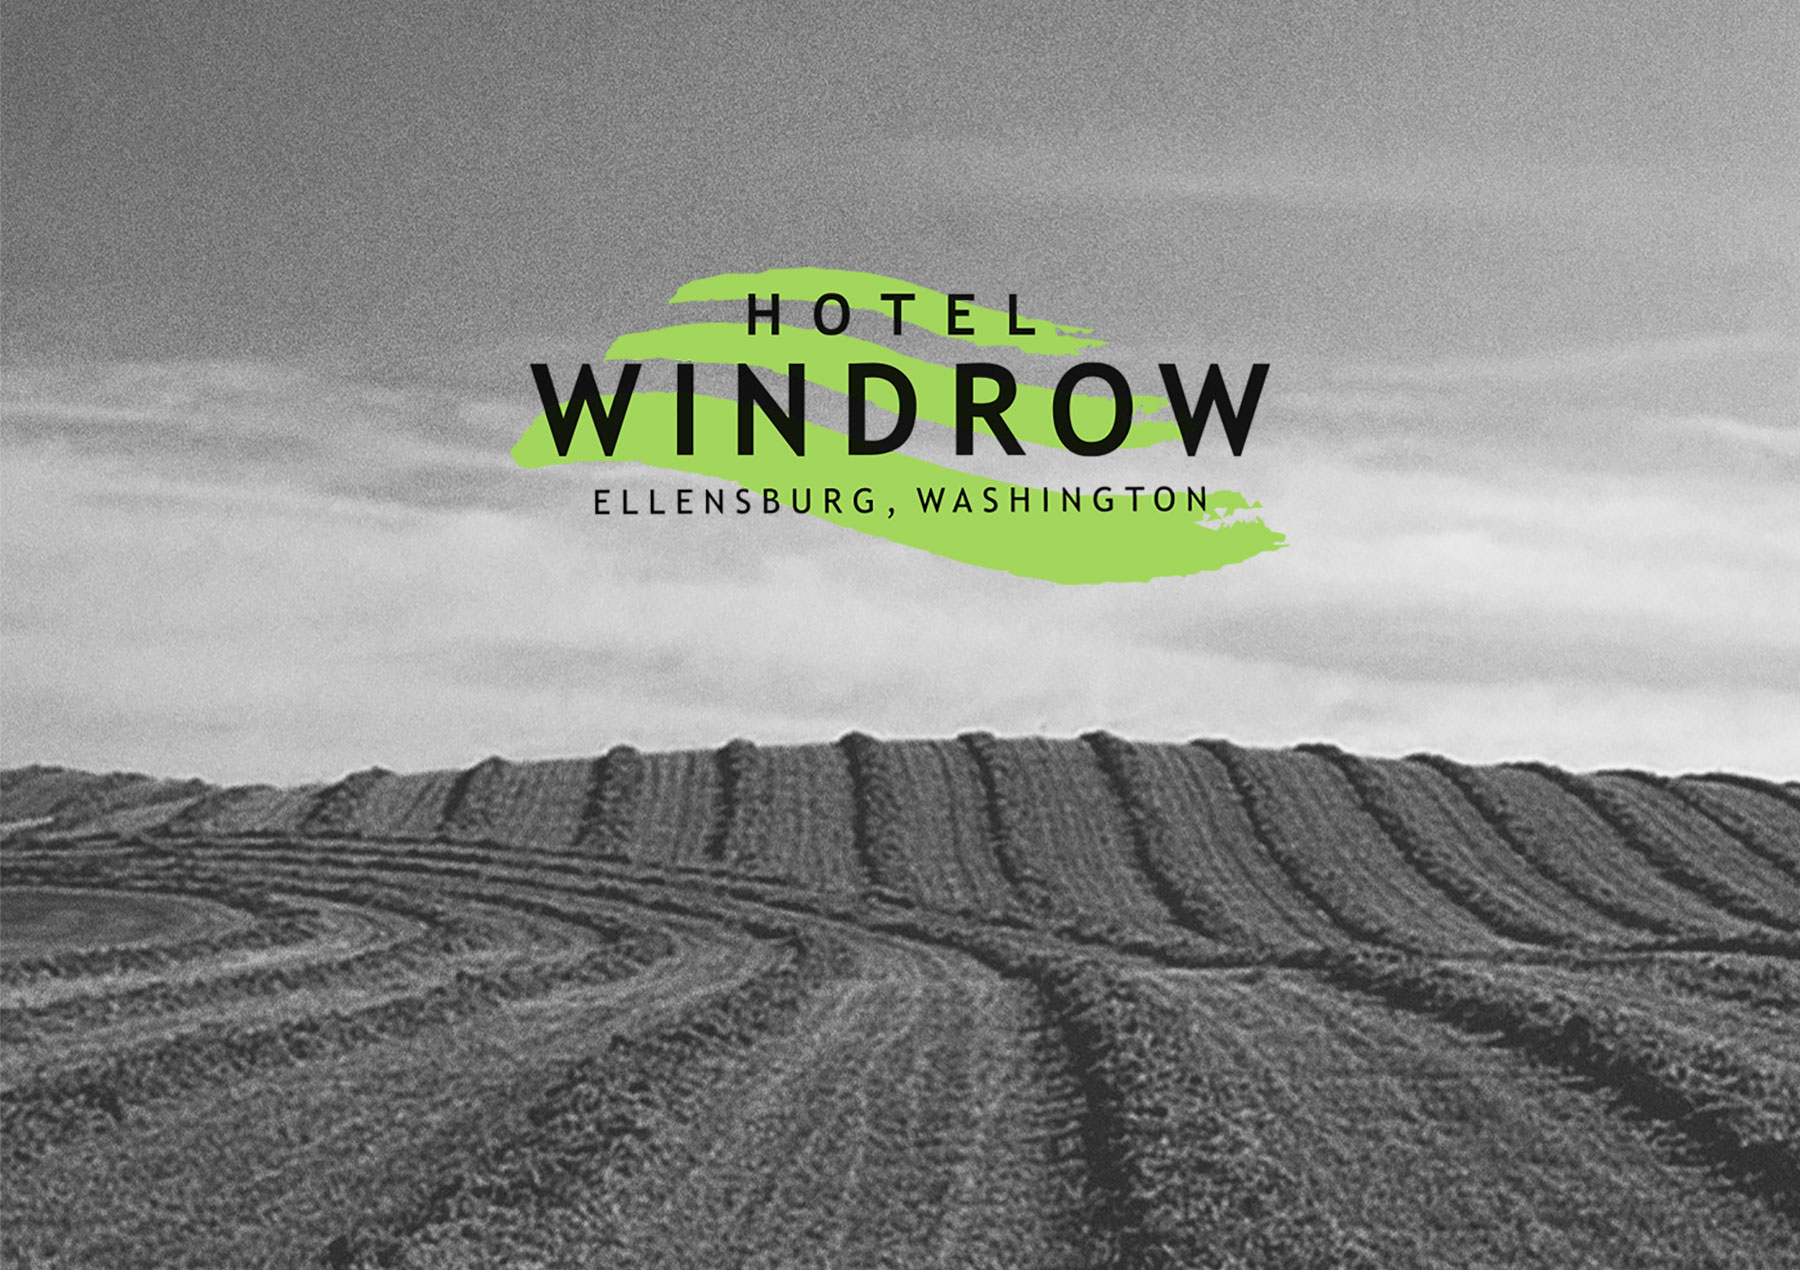 (c) Hotelwindrow.com